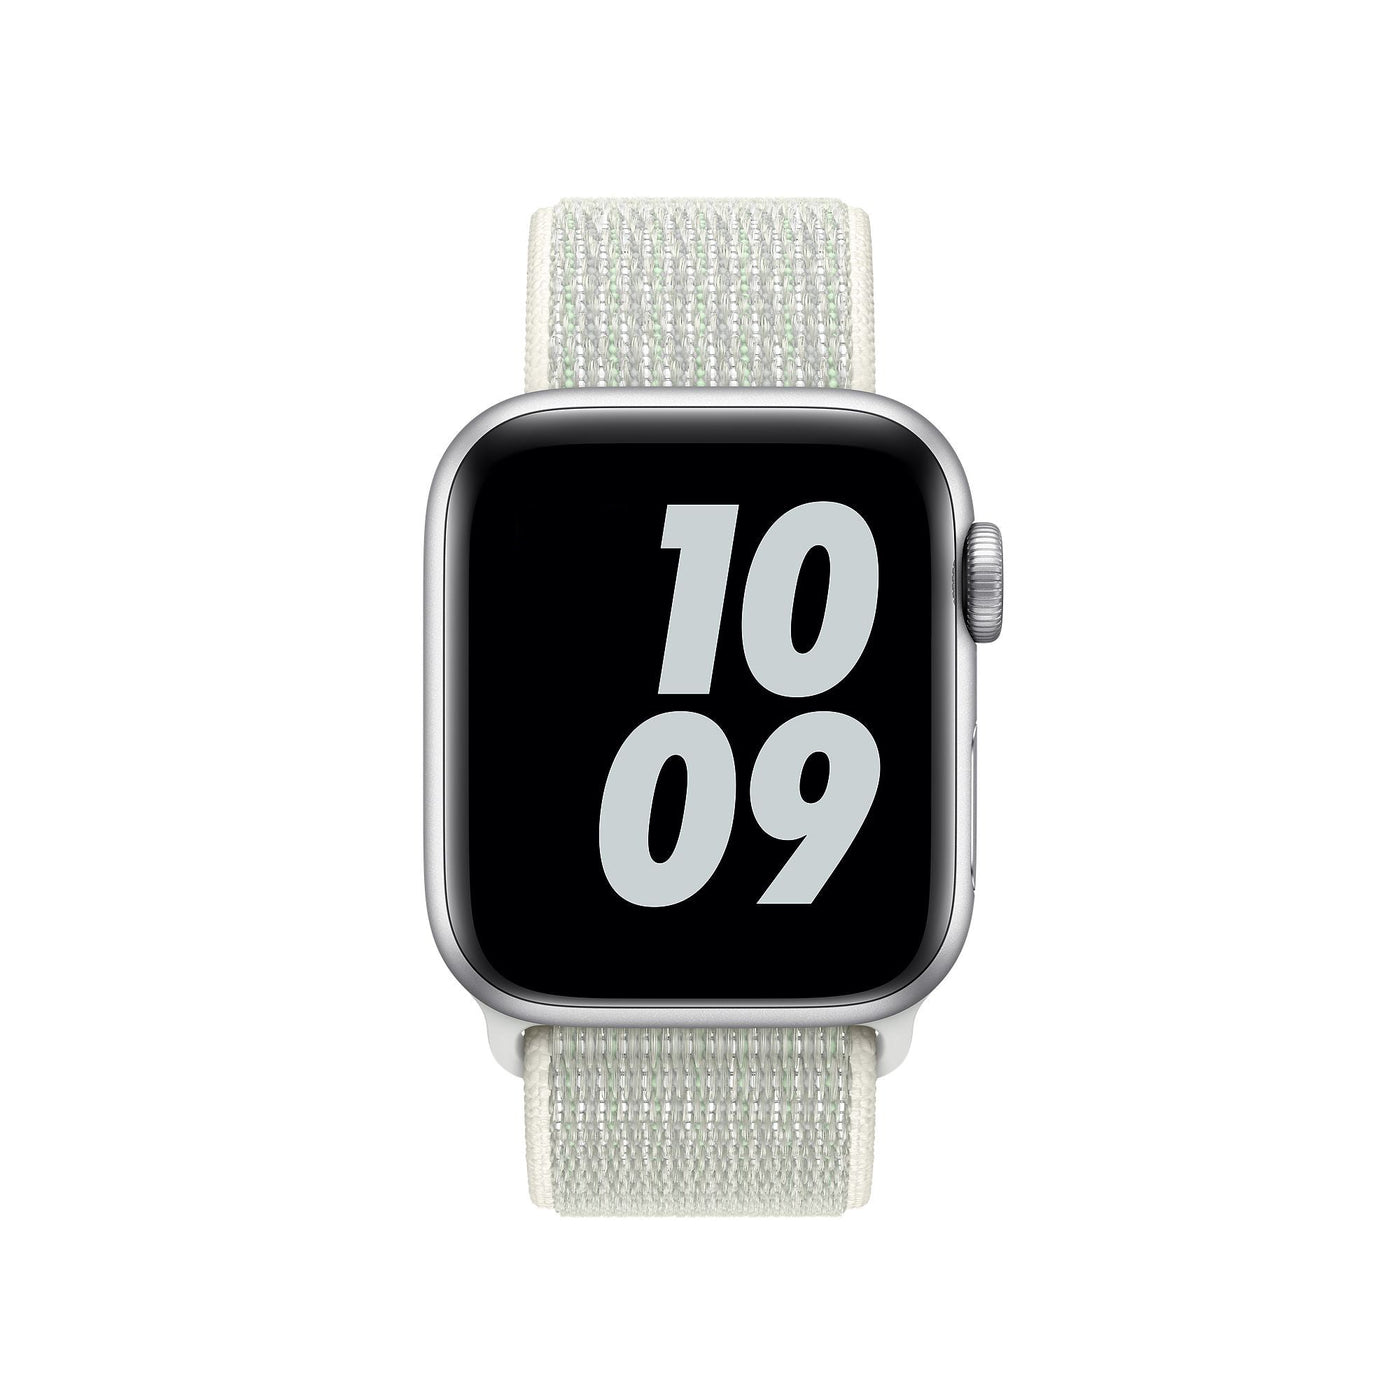 ALK Classic Nylon Band for Apple Watch in Spruce Aura - Alk Designs